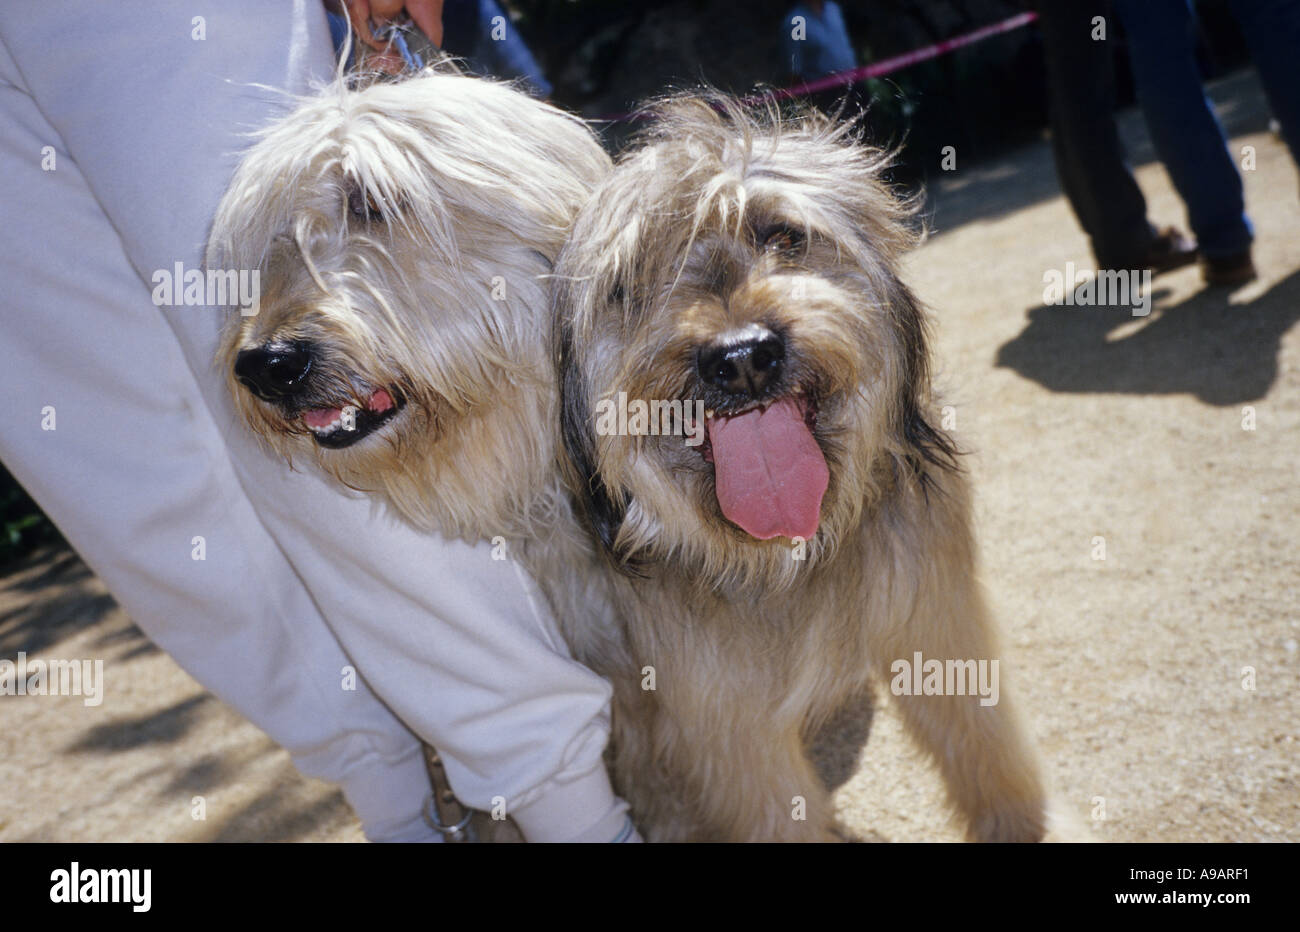 Perro de dos cabezas fotografías e imágenes de alta resolución - Alamy